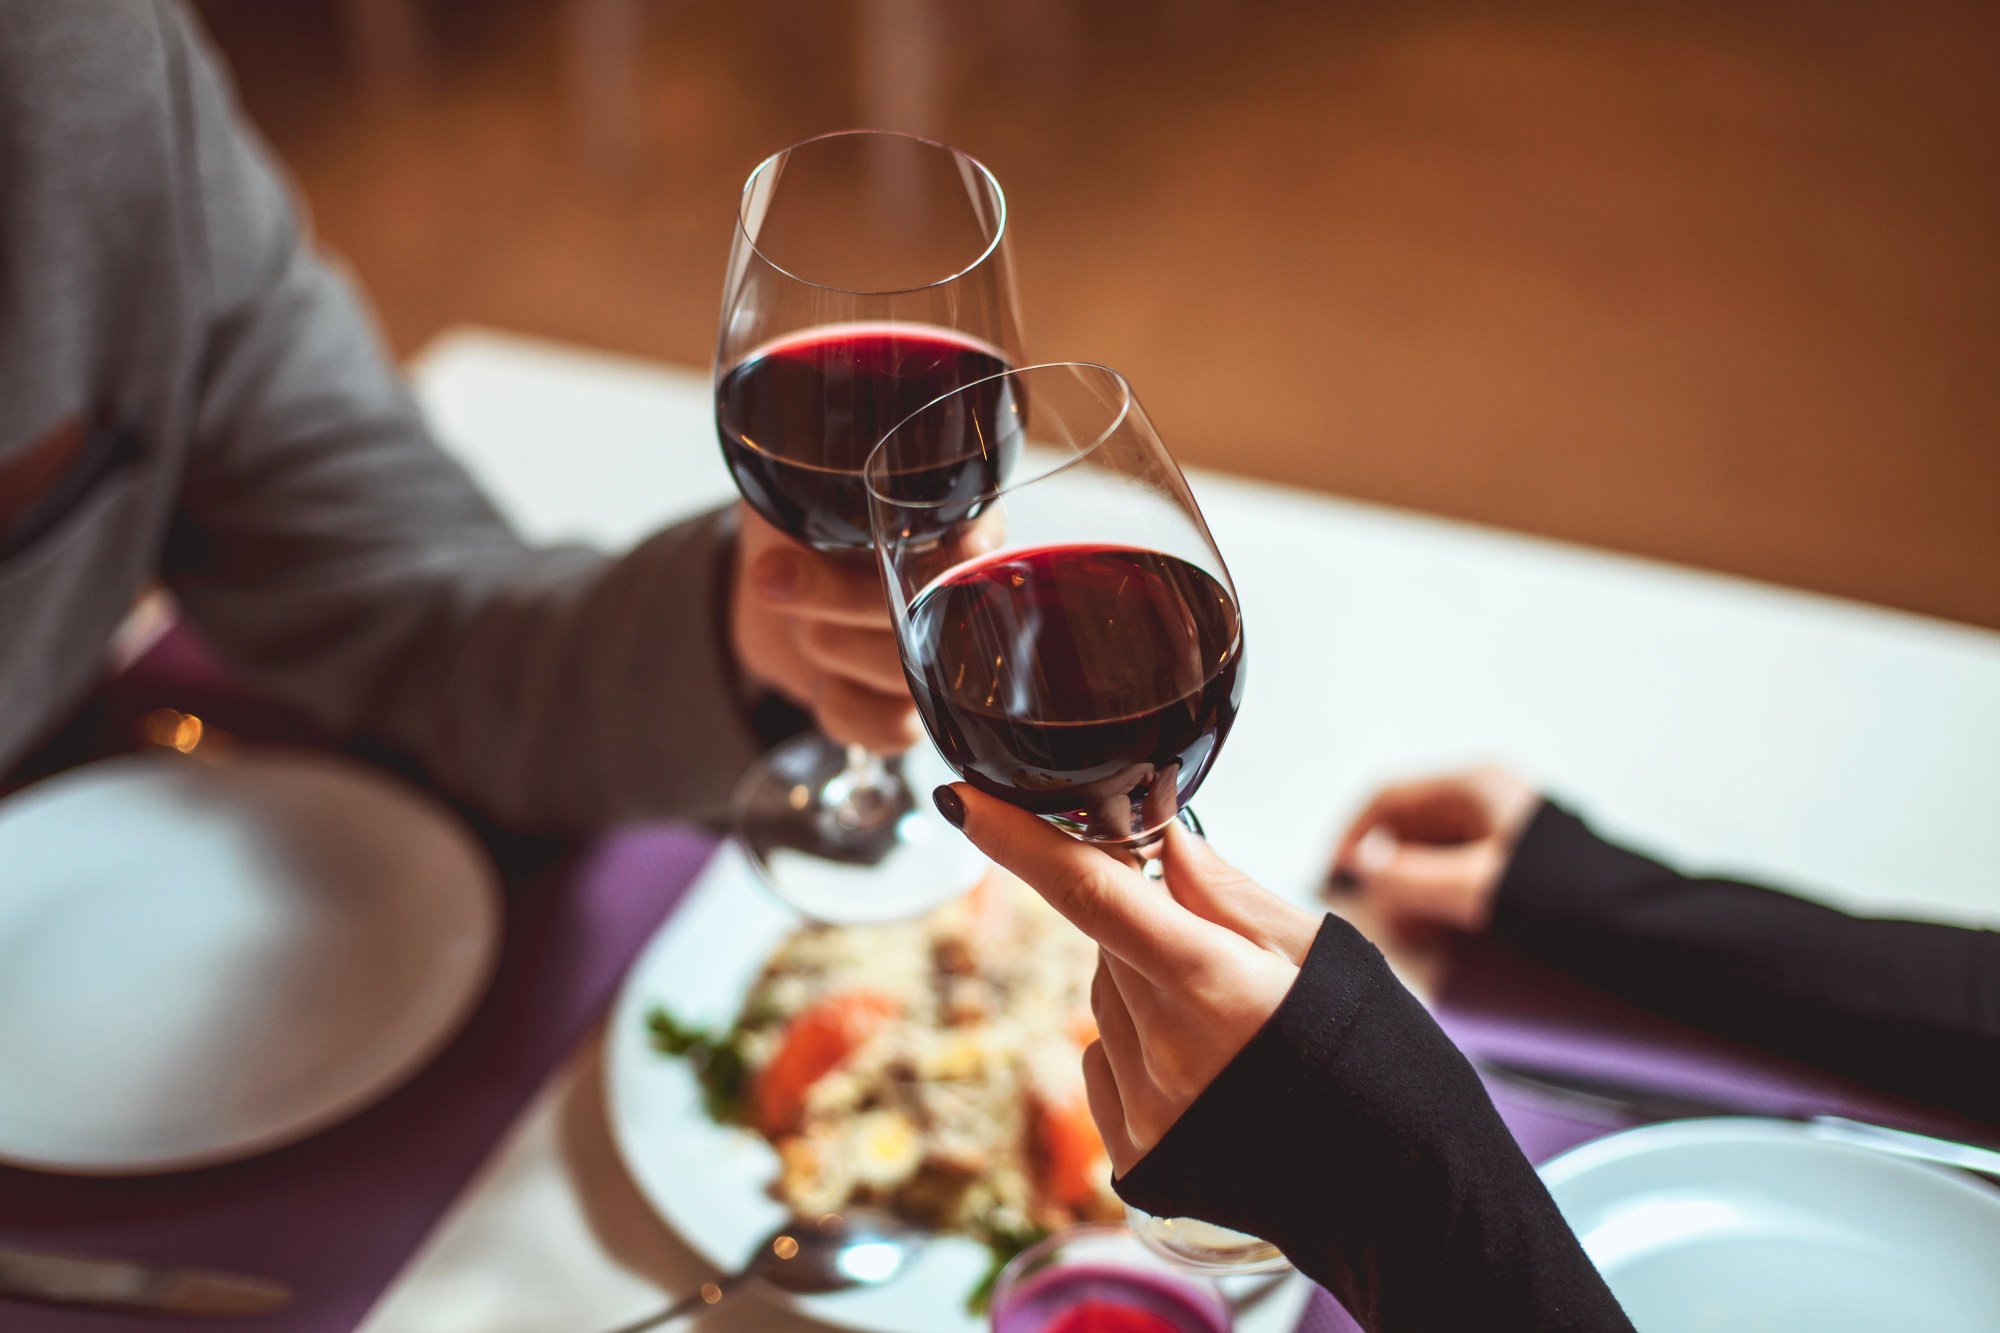 Бокал вина в ресторане. Бокал вина. Бокал вина на столе в ресторане. Бокал красного вина. Романтический ужин в ресторане.